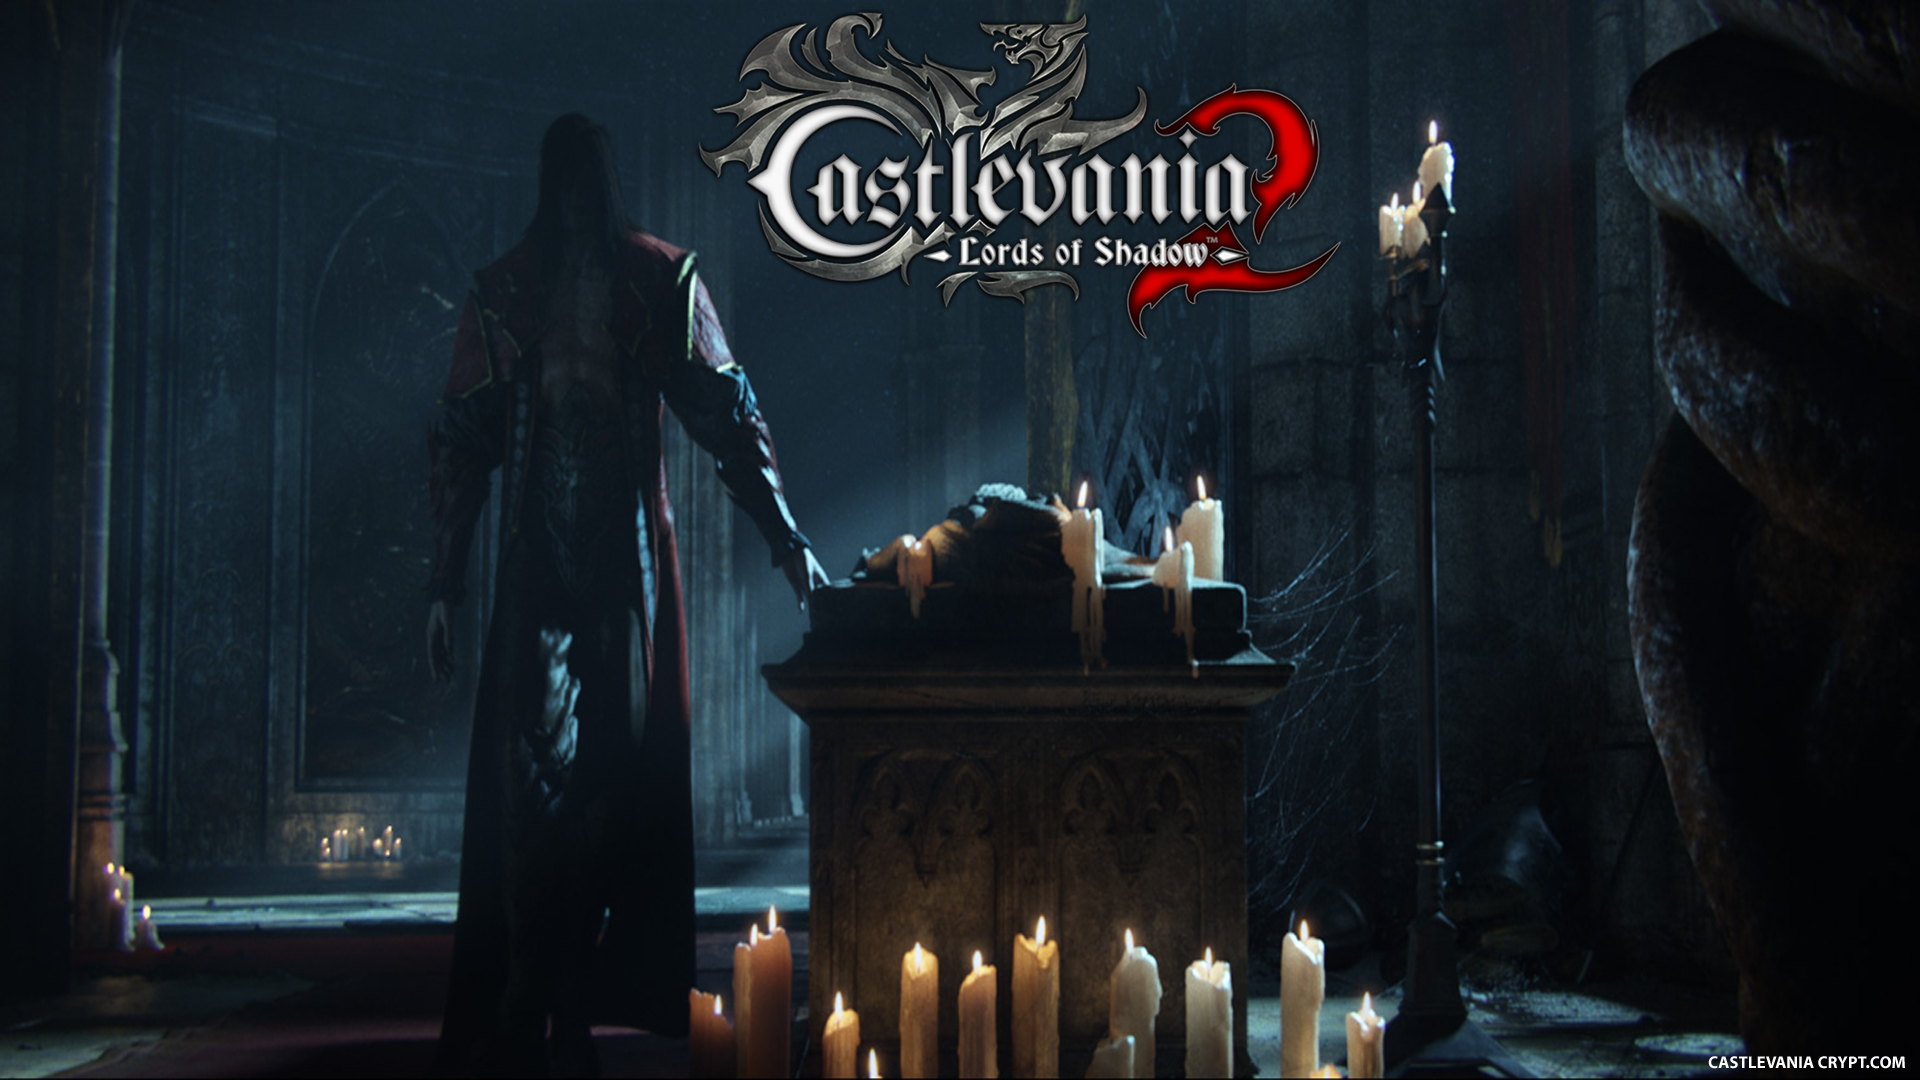 Castlevania Lords of Shadow 2 Wallpaper Castlevania Crypt.com